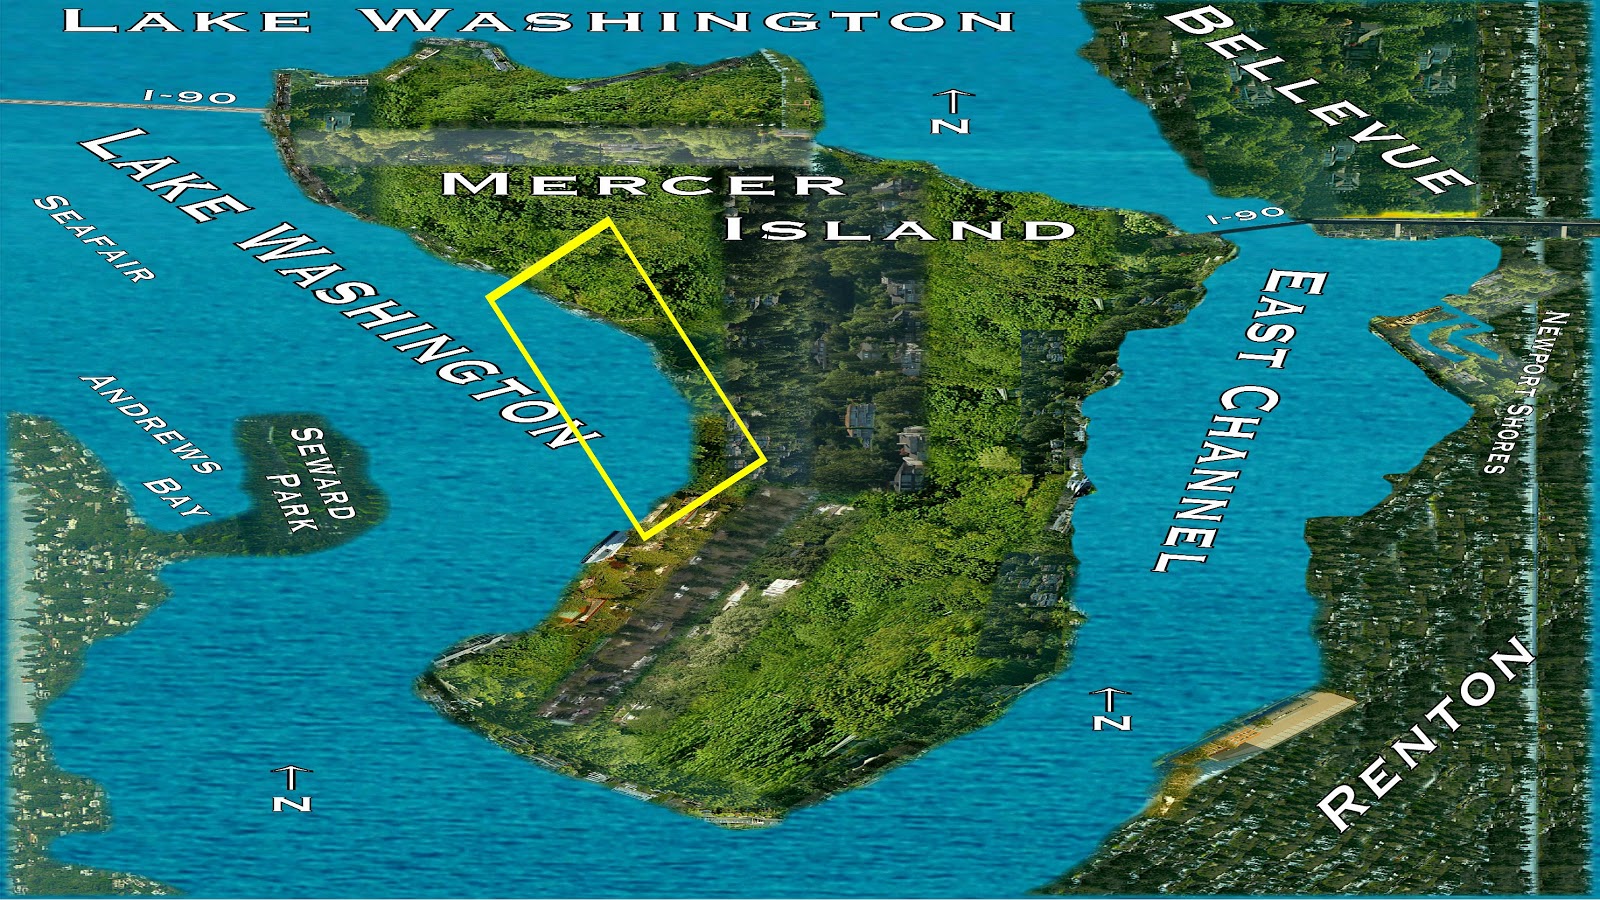 Lake Washington Cruising: Mercer Island West – Central - Mansions1600 x 900